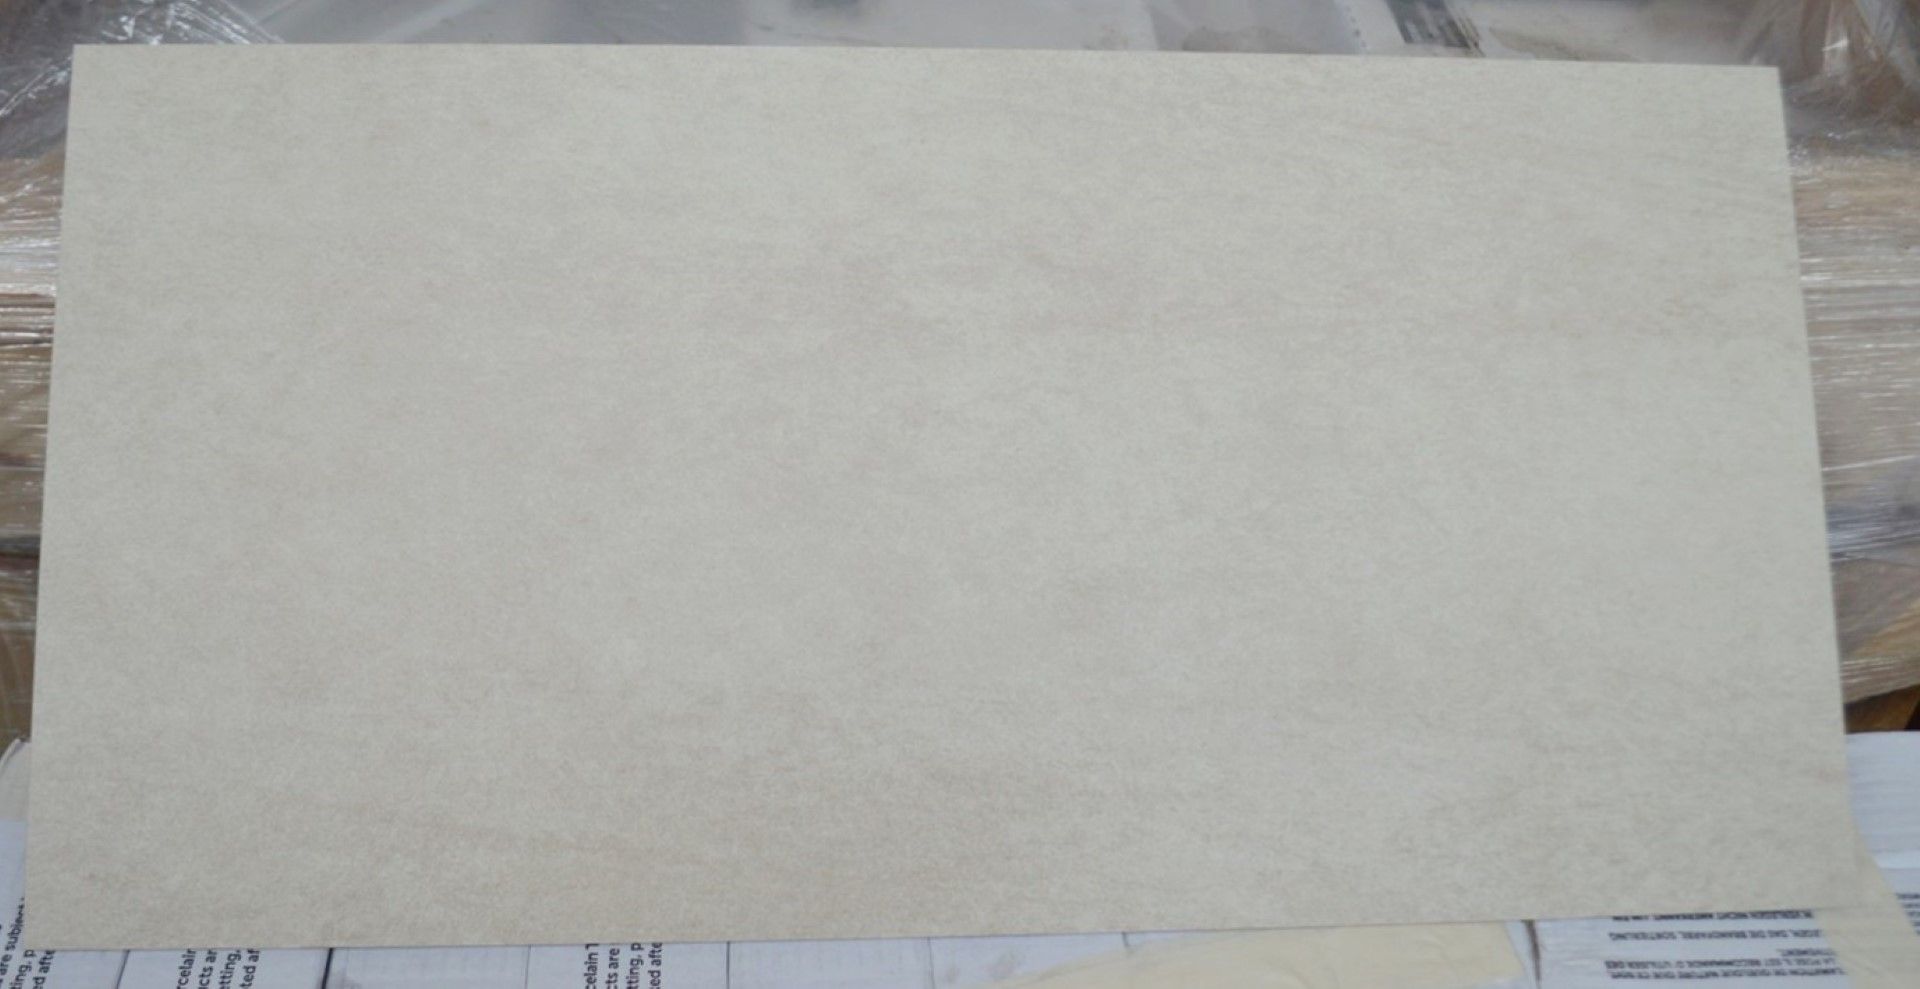 6 x Boxes of RAK Porcelain Floor or Wall Tiles - Concrete Sand Design Design in Beige - 30 x 60 cm - Image 7 of 8